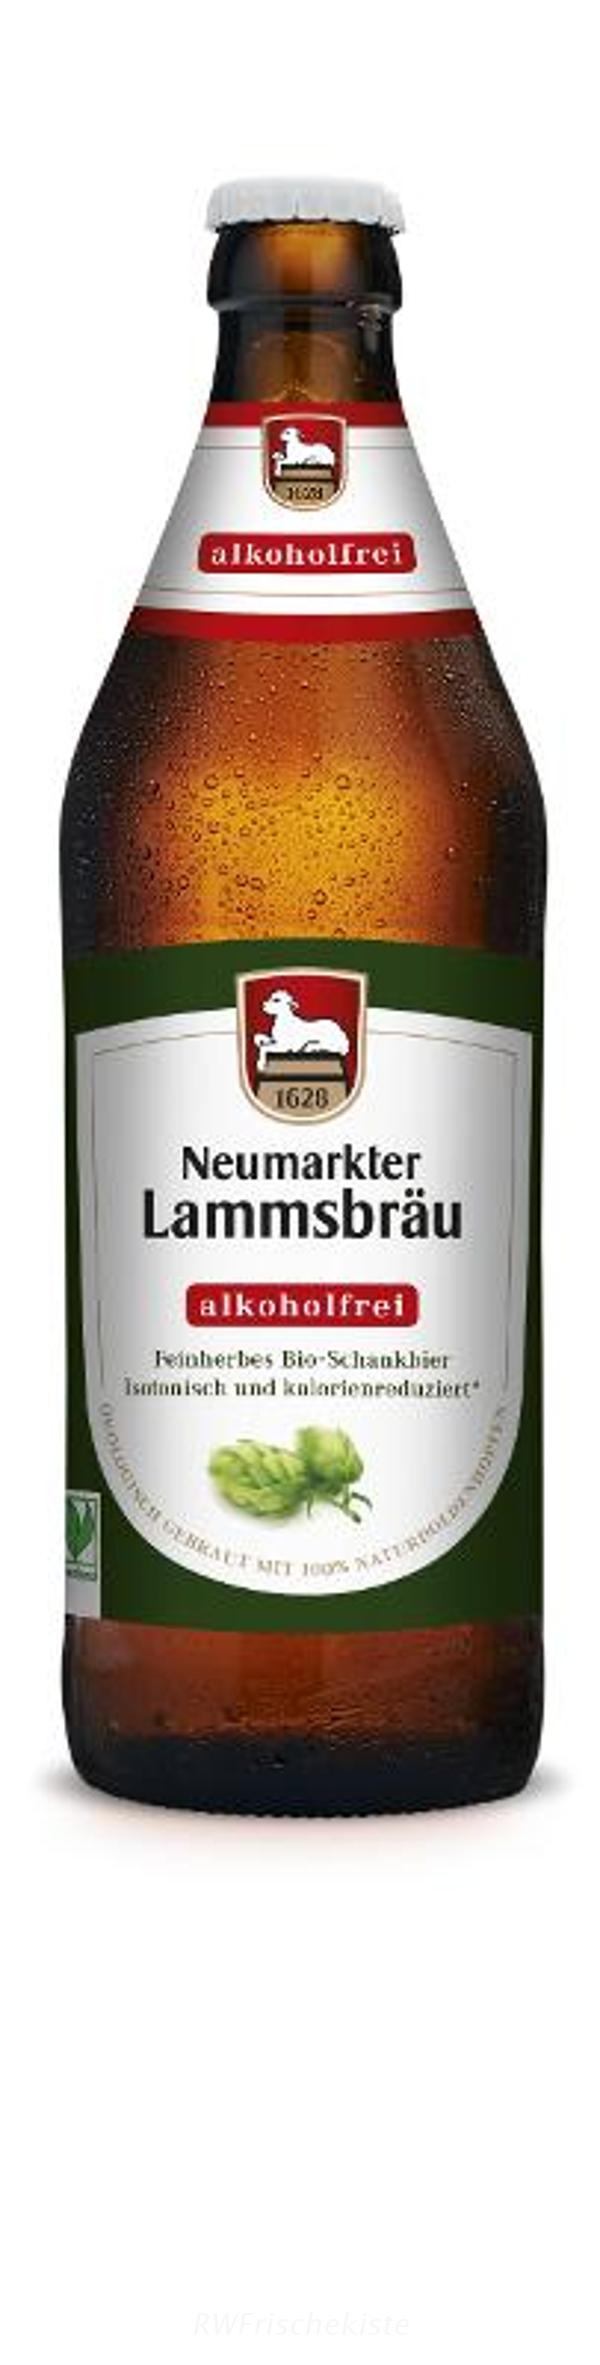 Produktfoto zu Lammsbräu Alkoholfrei 0,5l